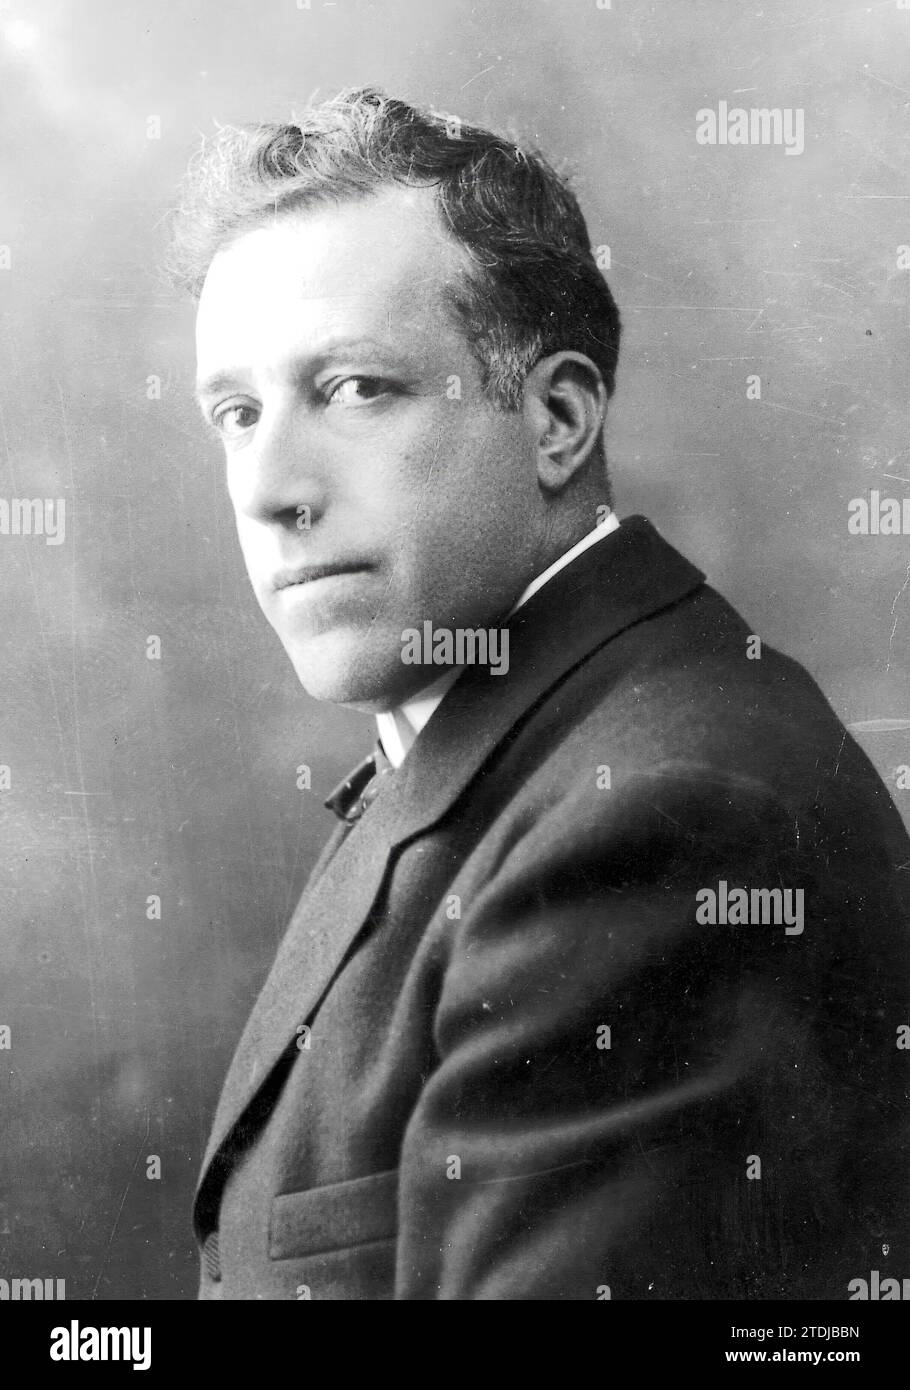 12/31/1929. Profile portrait of Julian Besteiro. Credit: Album / Archivo ABC / Alfonso Sánchez García Alfonso Stock Photo